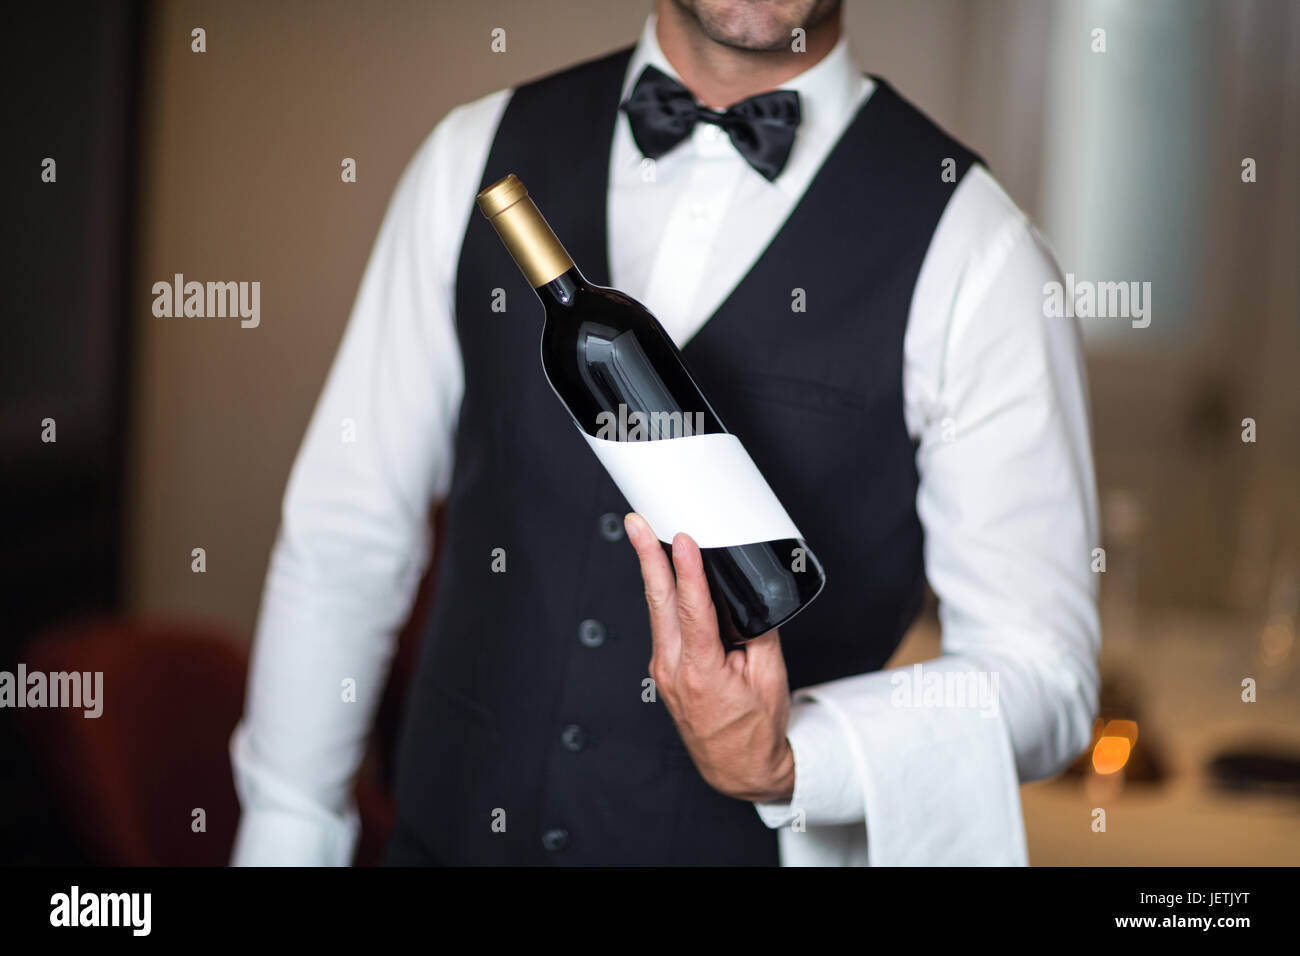 [Image: waiter-presenting-red-wine-JETJYT.jpg]